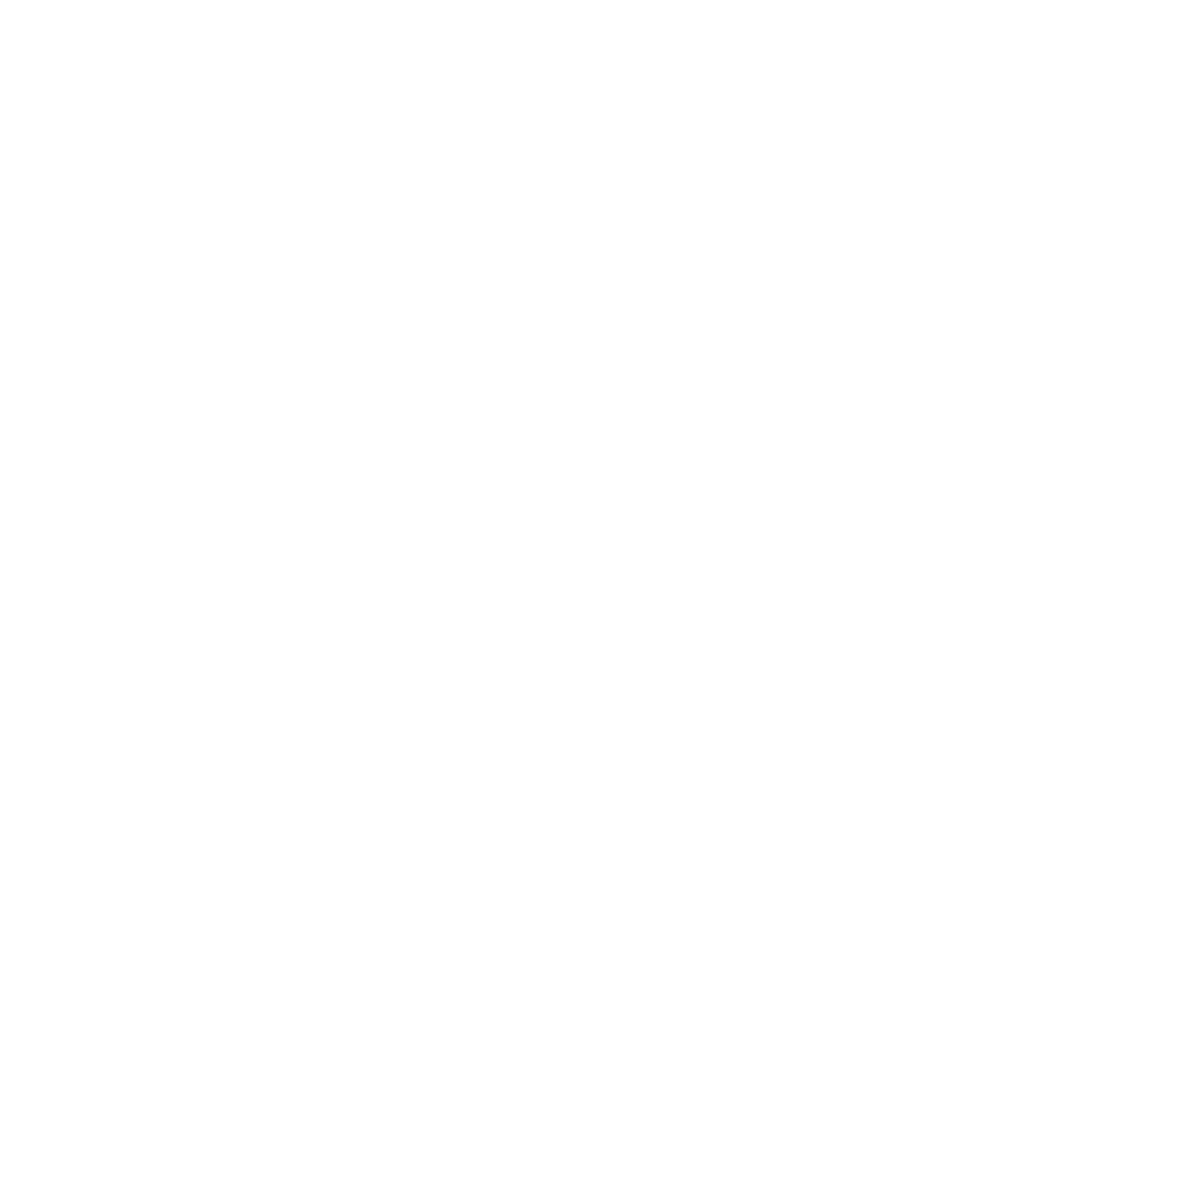 Sheridan College in Johnson County